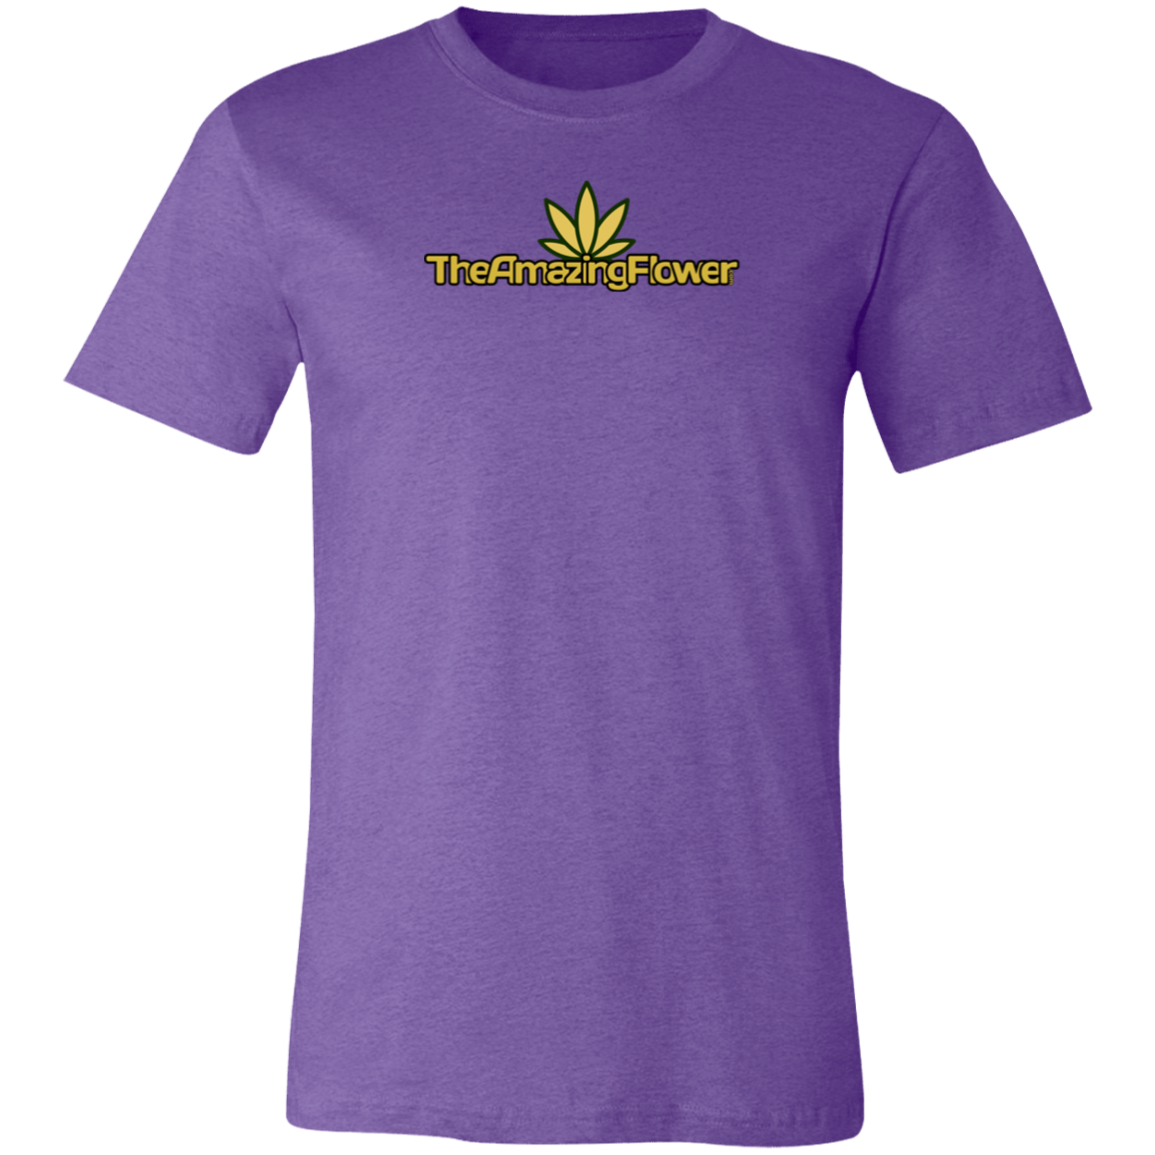 Old Gold Hemp Leaf Logo T-Shirt in purple heather